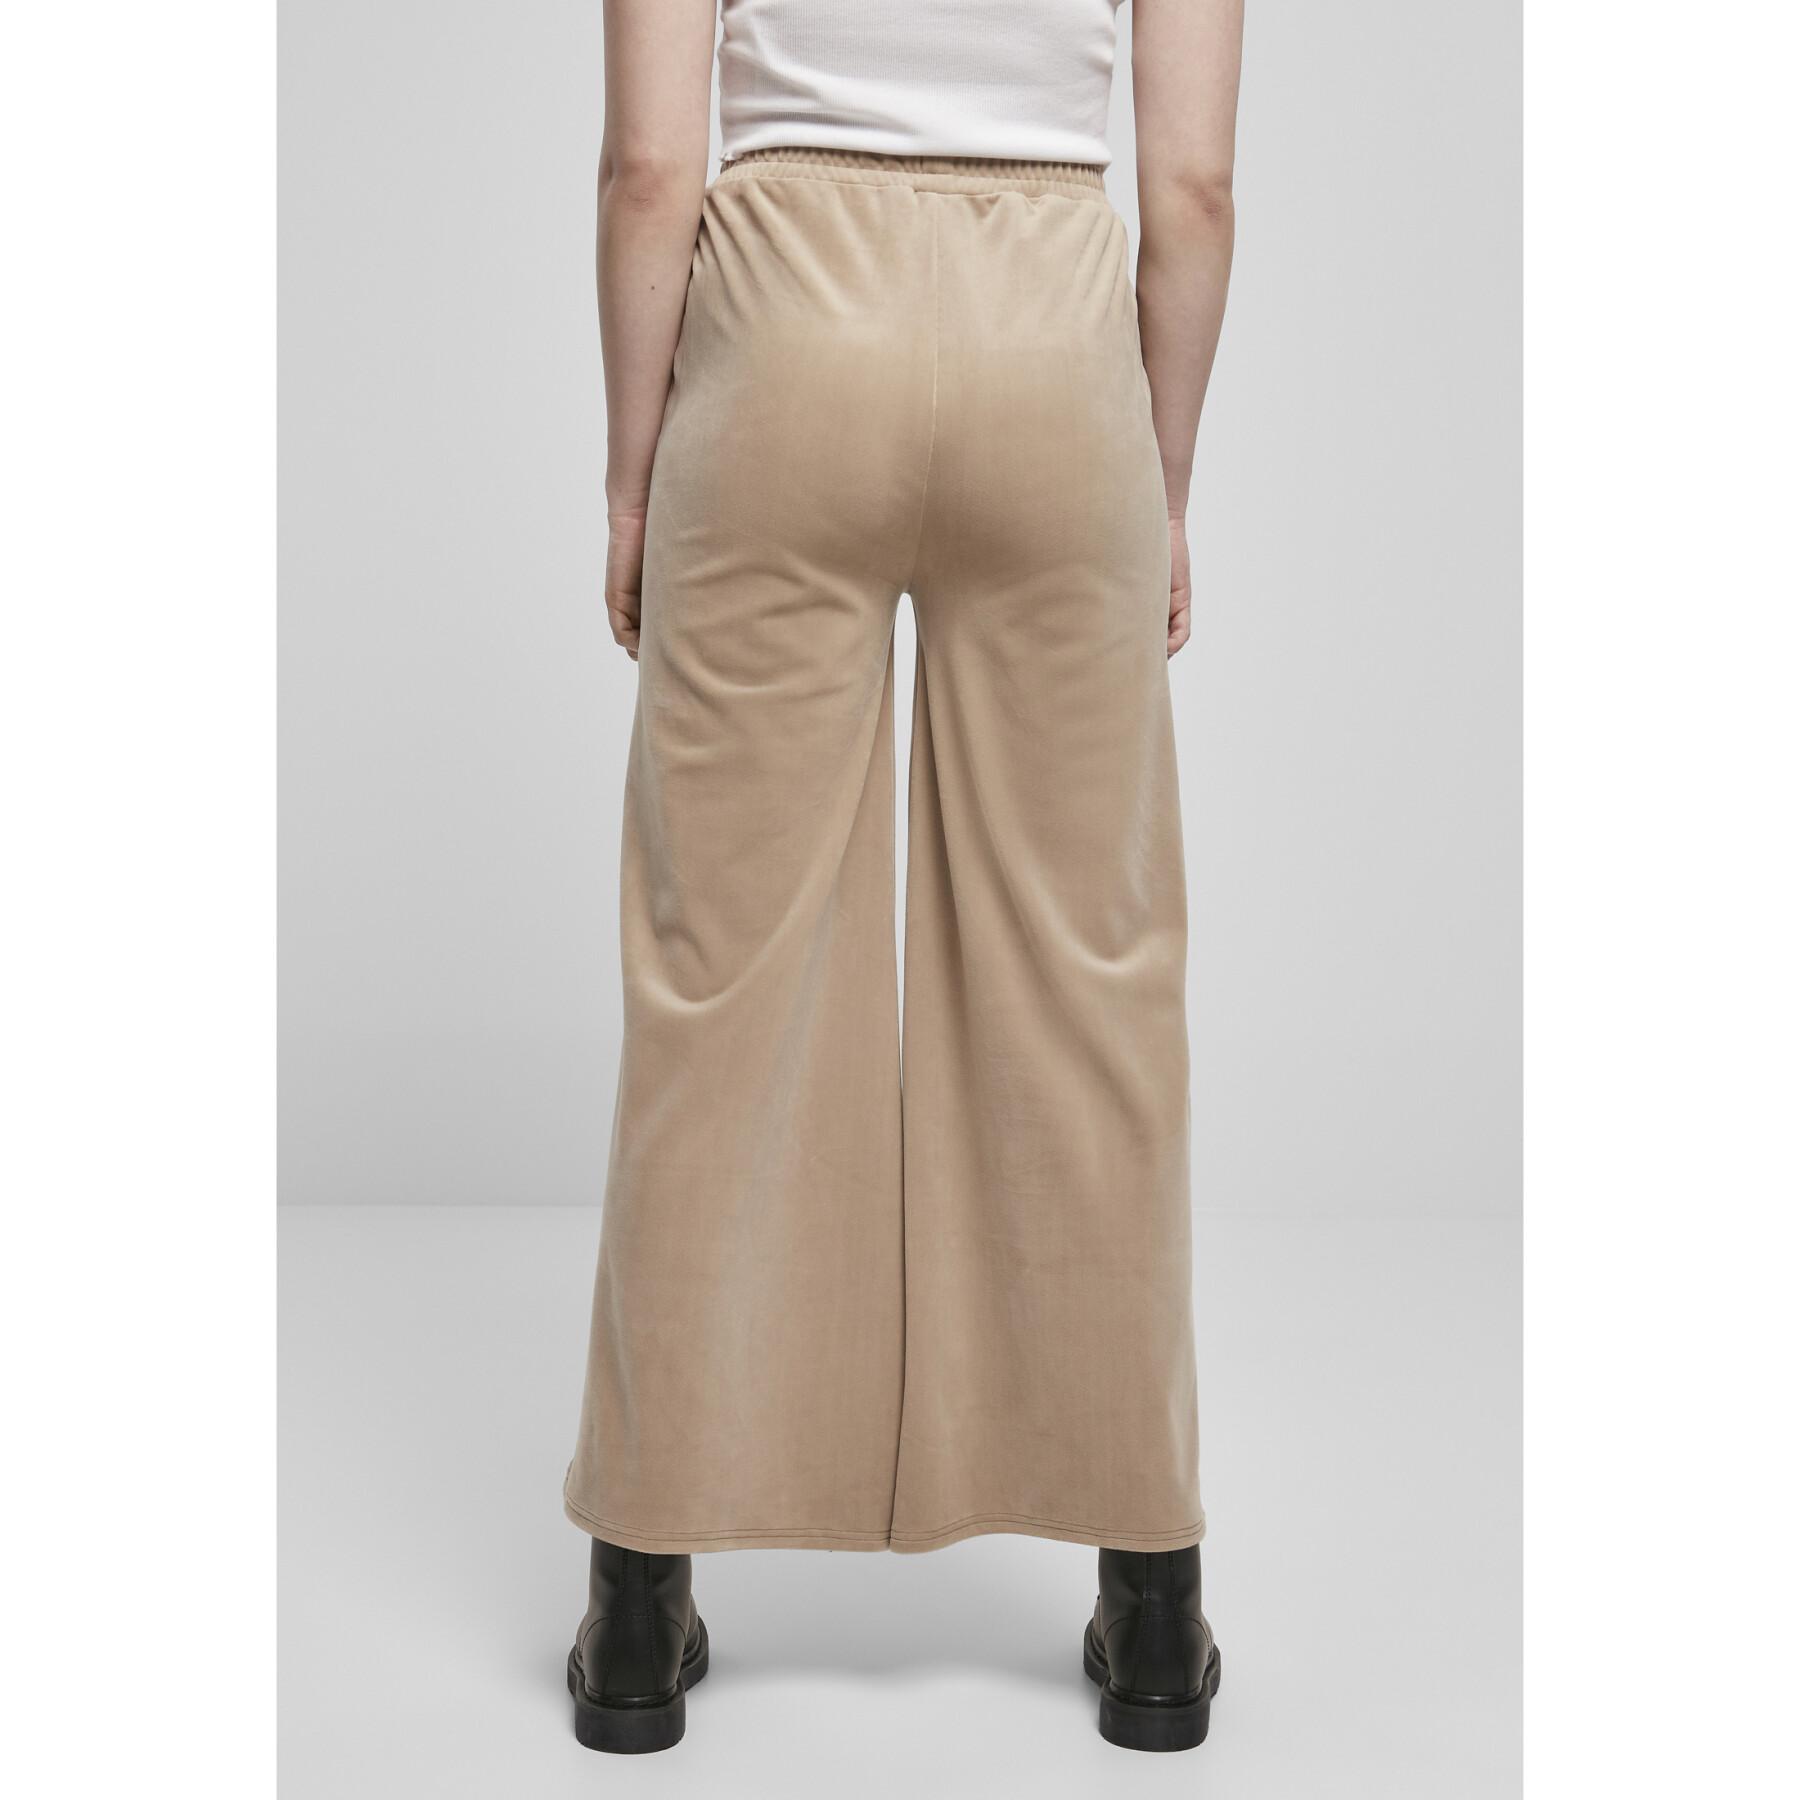 Women's trousers Urban Classics high waist straight velvet (GT)